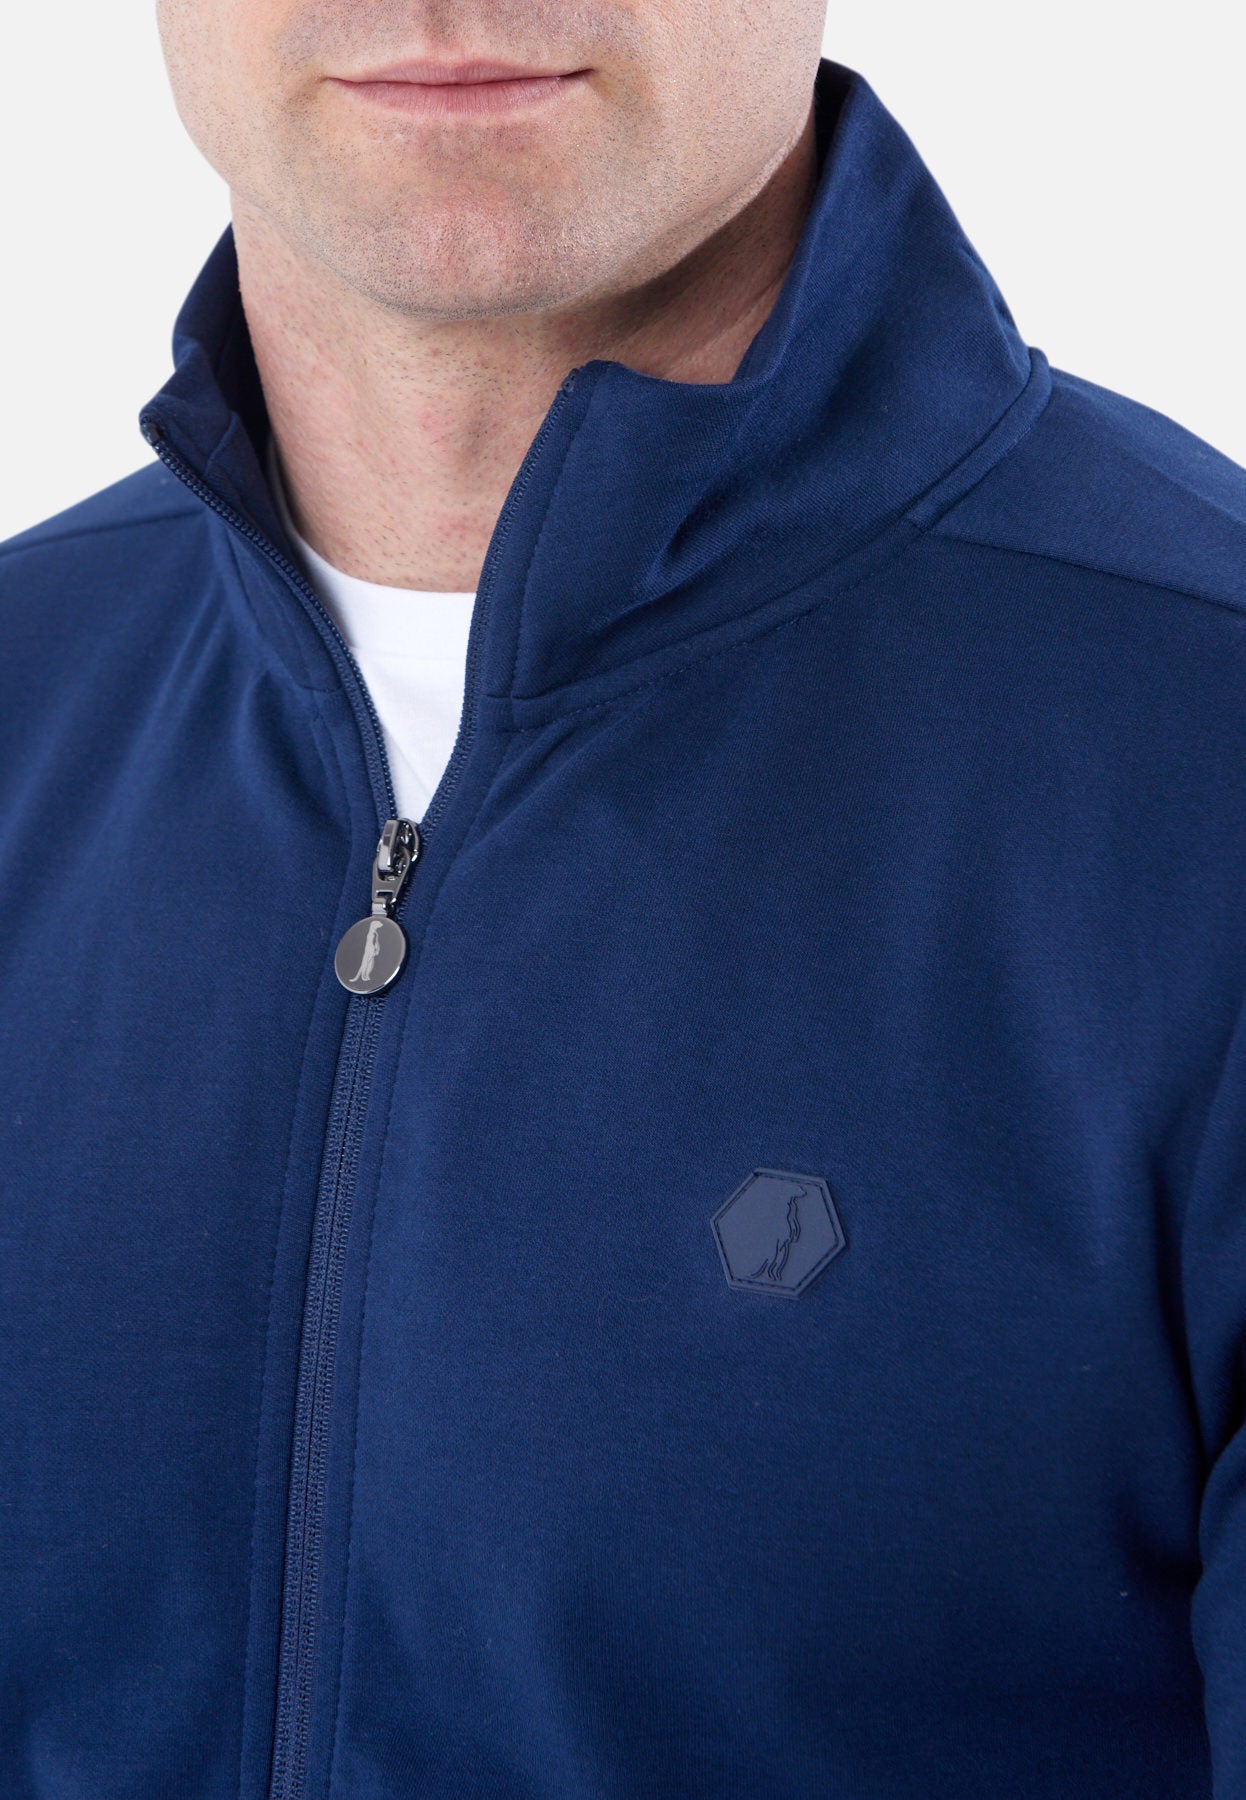 A men's navy blue full-zip Sweatshirt from 6th Sense. 